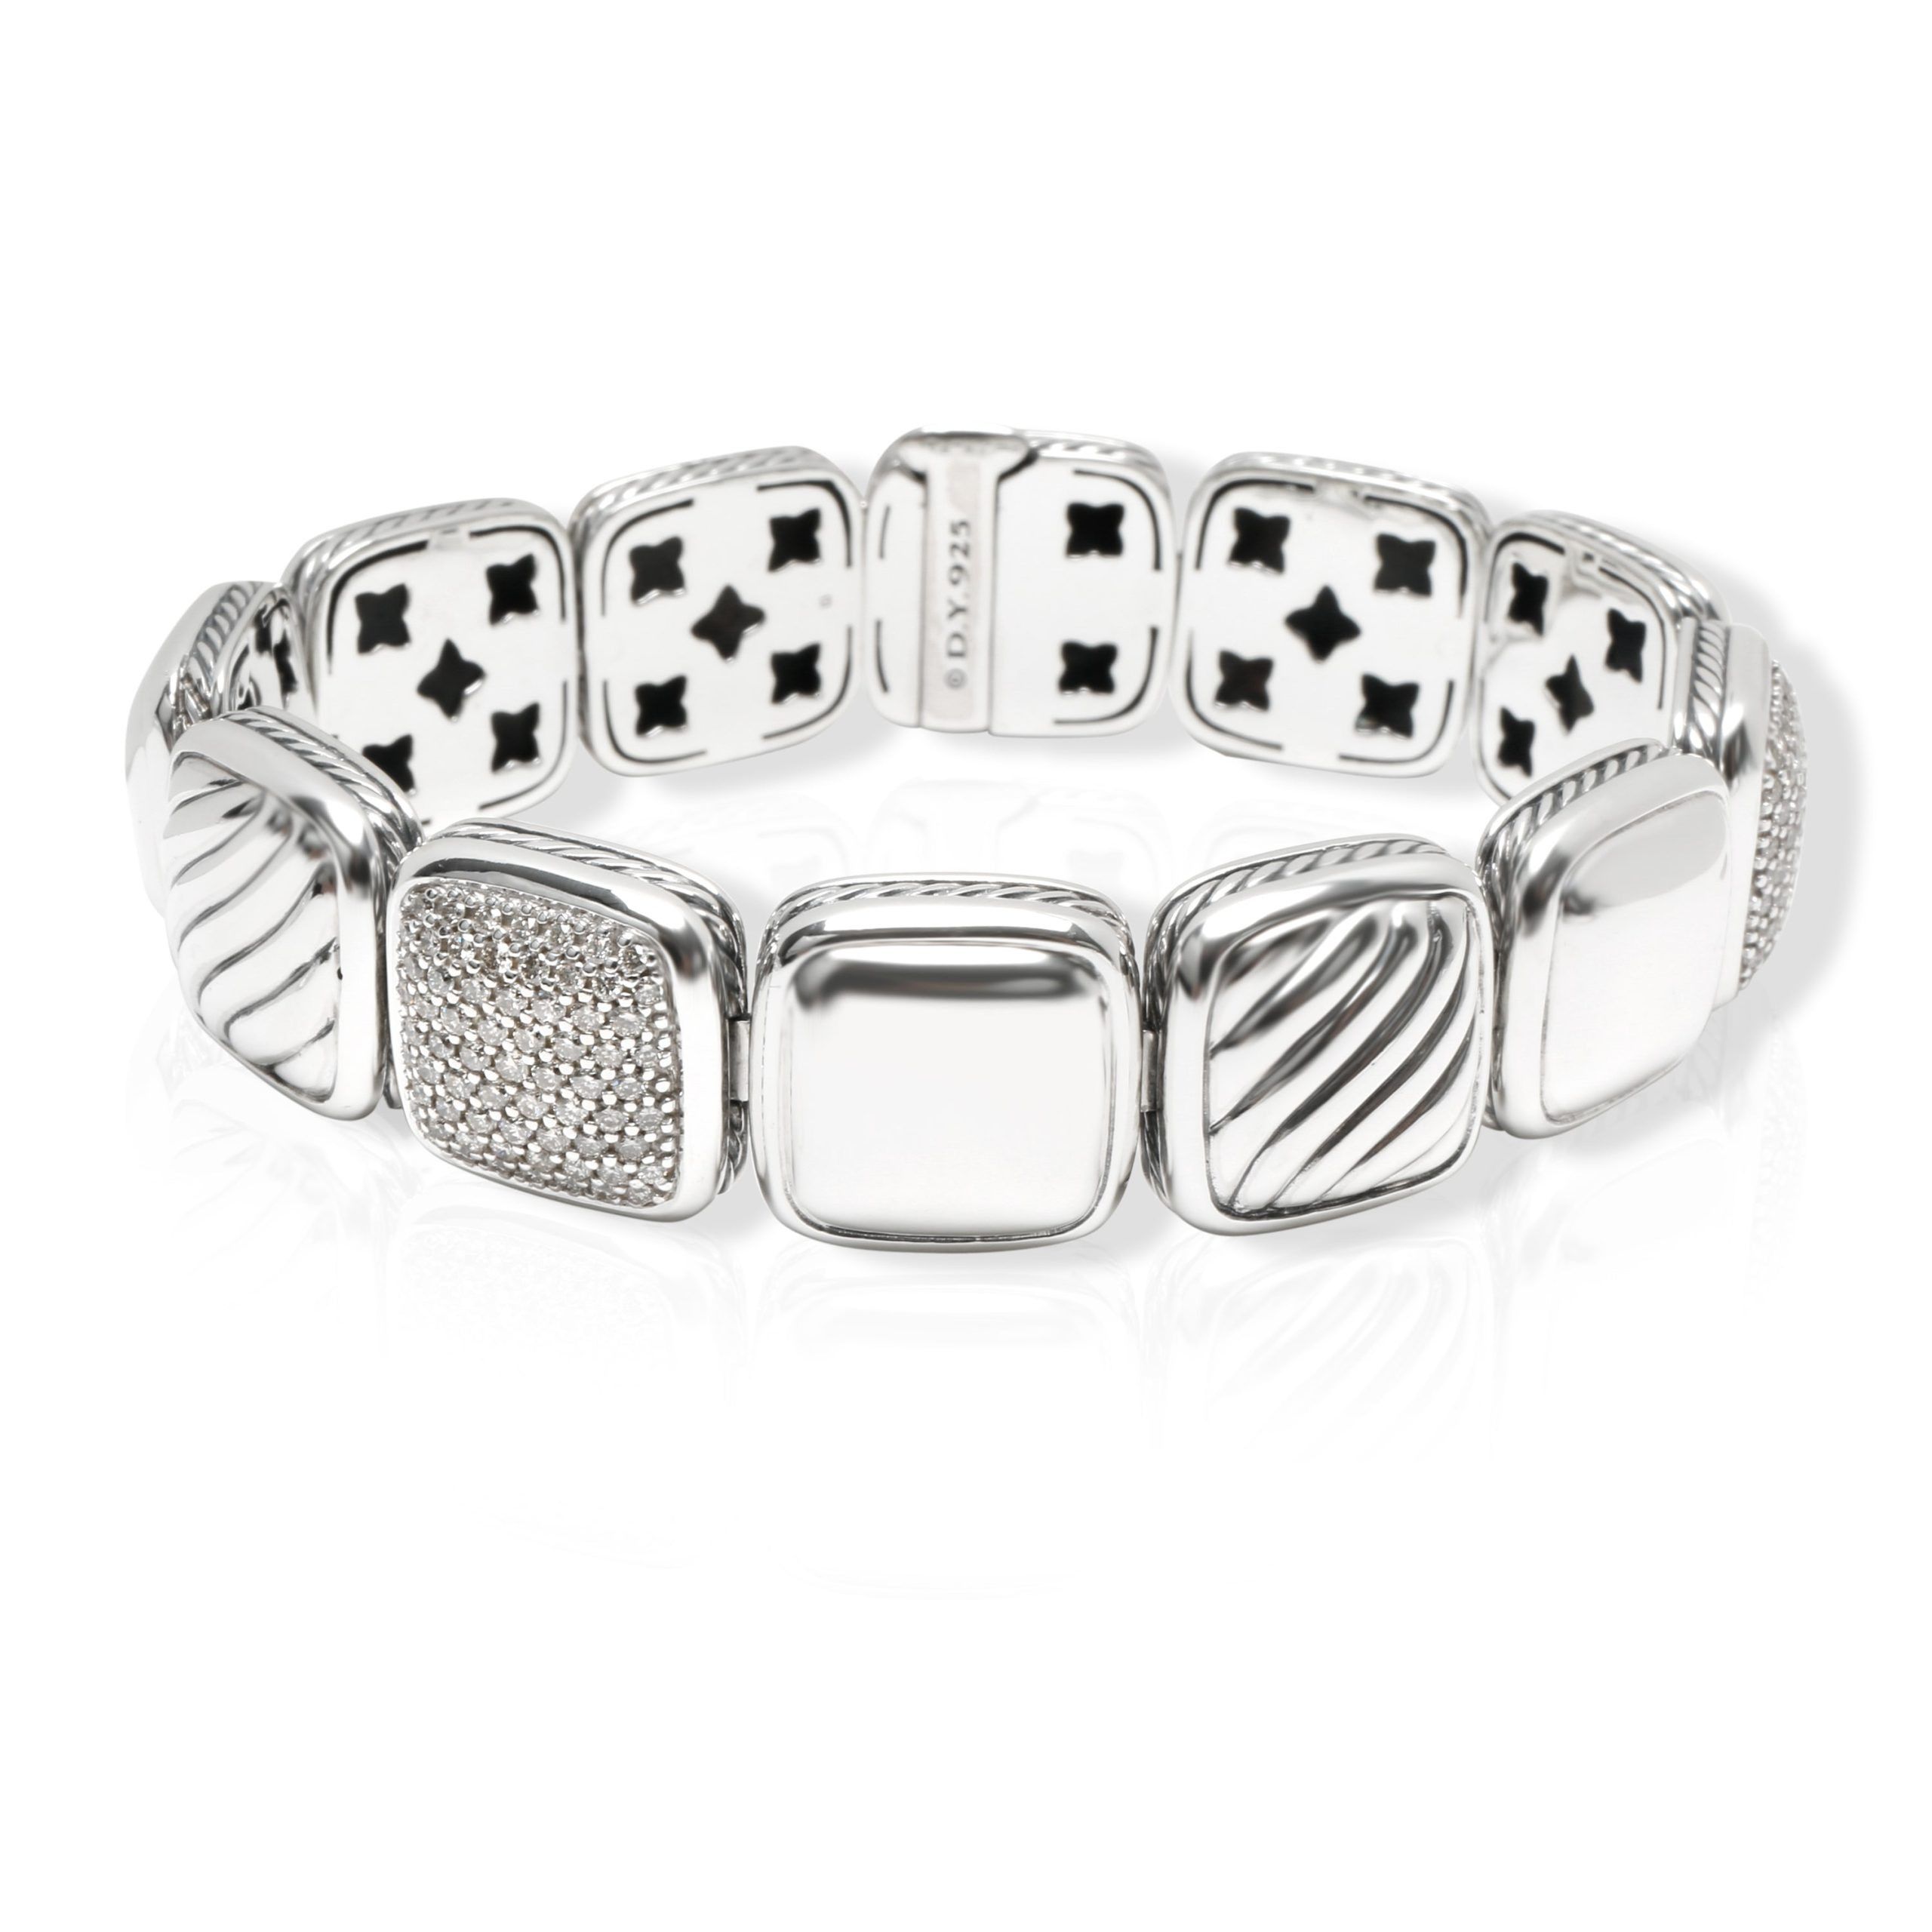 David Yurman David Yurman Chiclet Diamond Bracelet in Sterling Silver 1.75 CTW Size ONE SIZE - 1 Preview